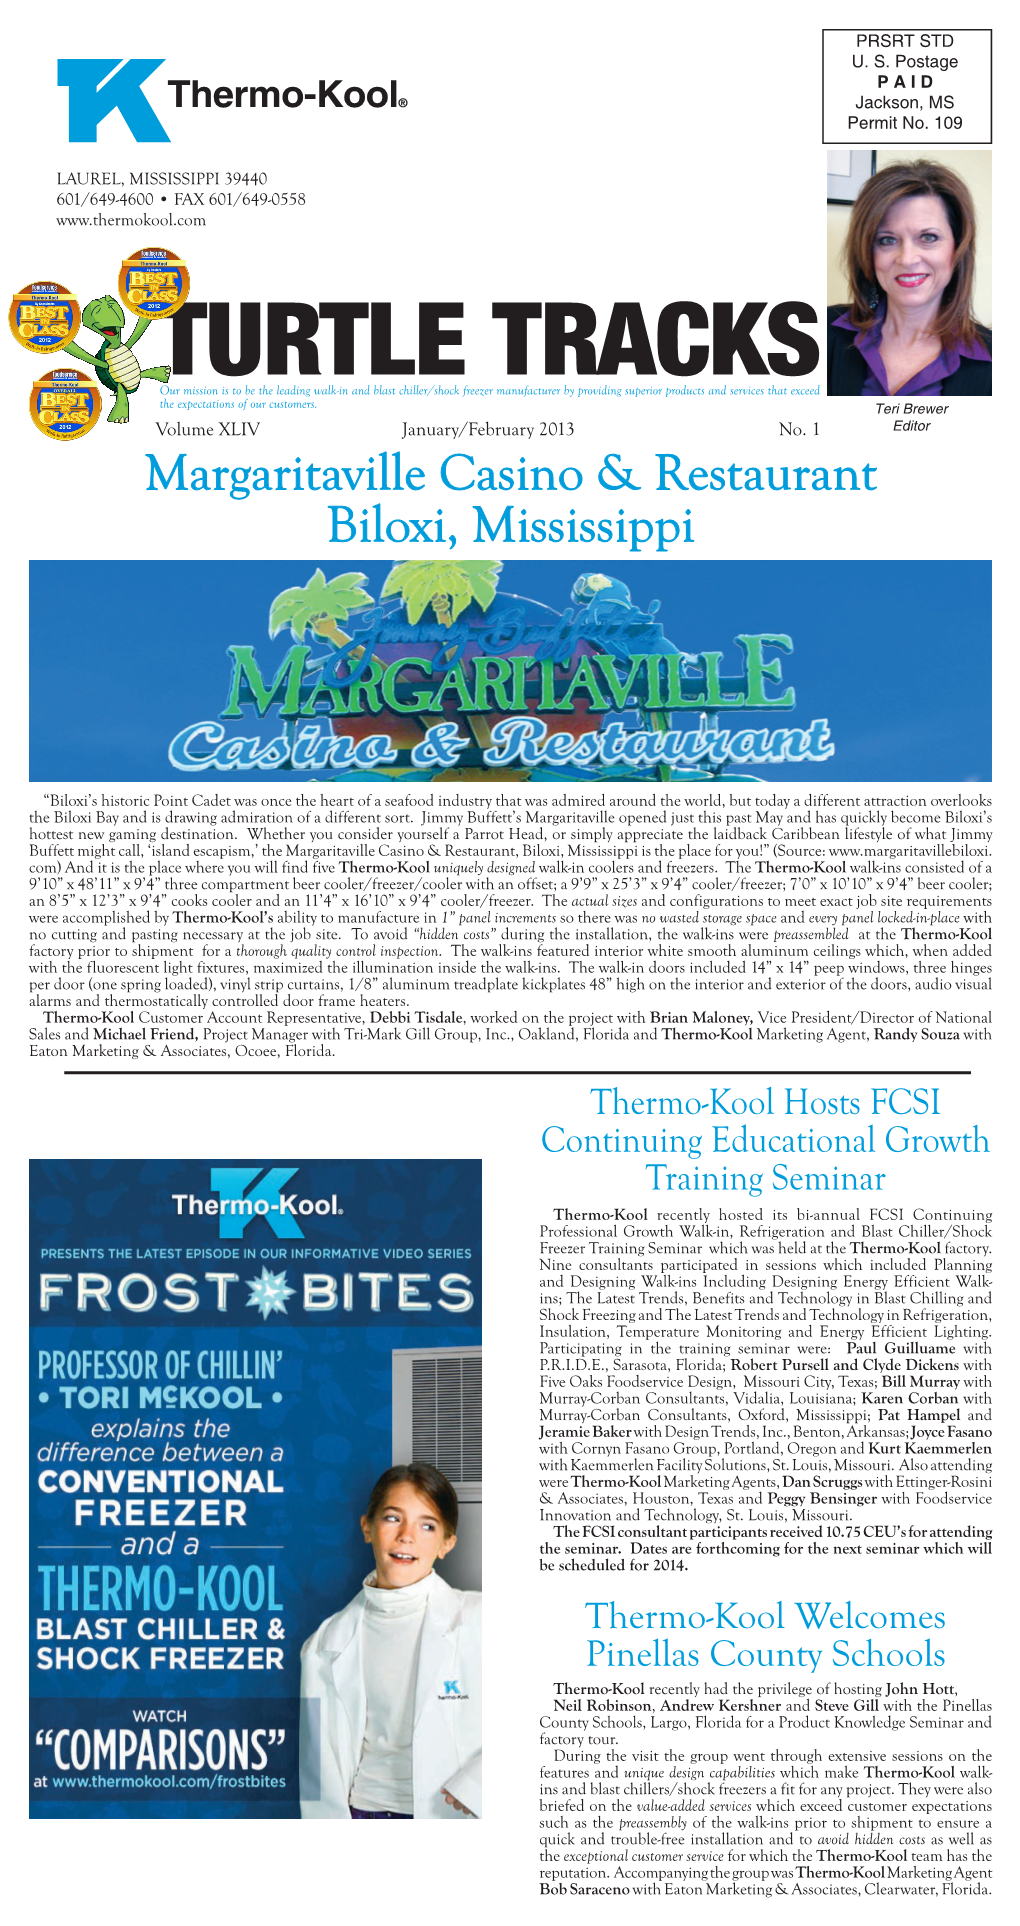 Margaritaville Casino & Restaurant Biloxi, Mississippi